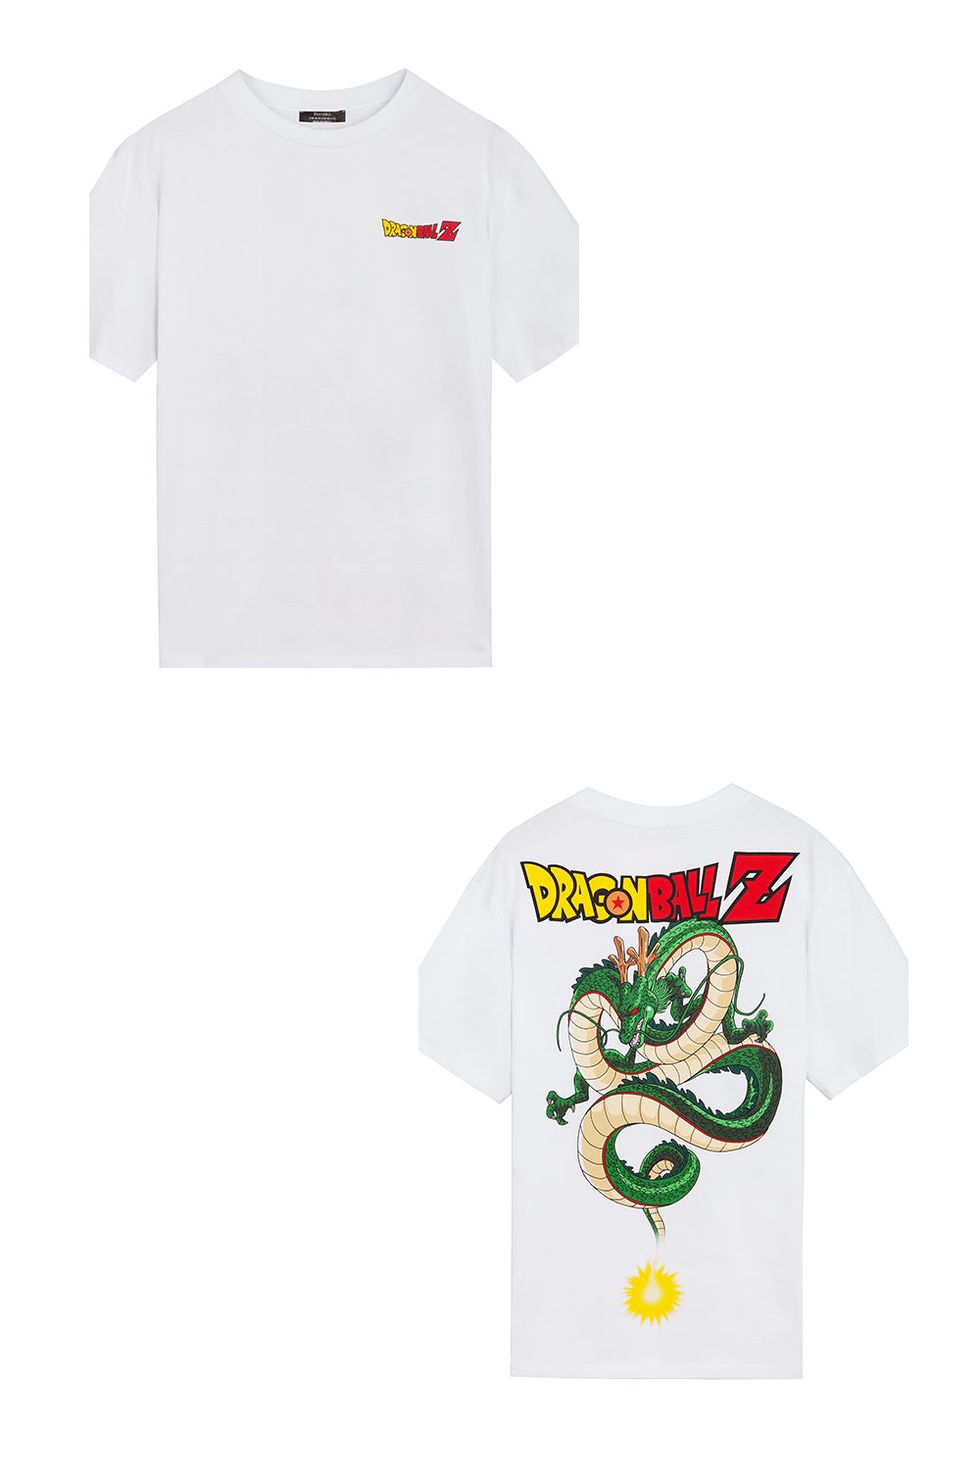 Dragon Ball también en y camisetas de Bershka: ¿horterada teen o tendencia poderosa?